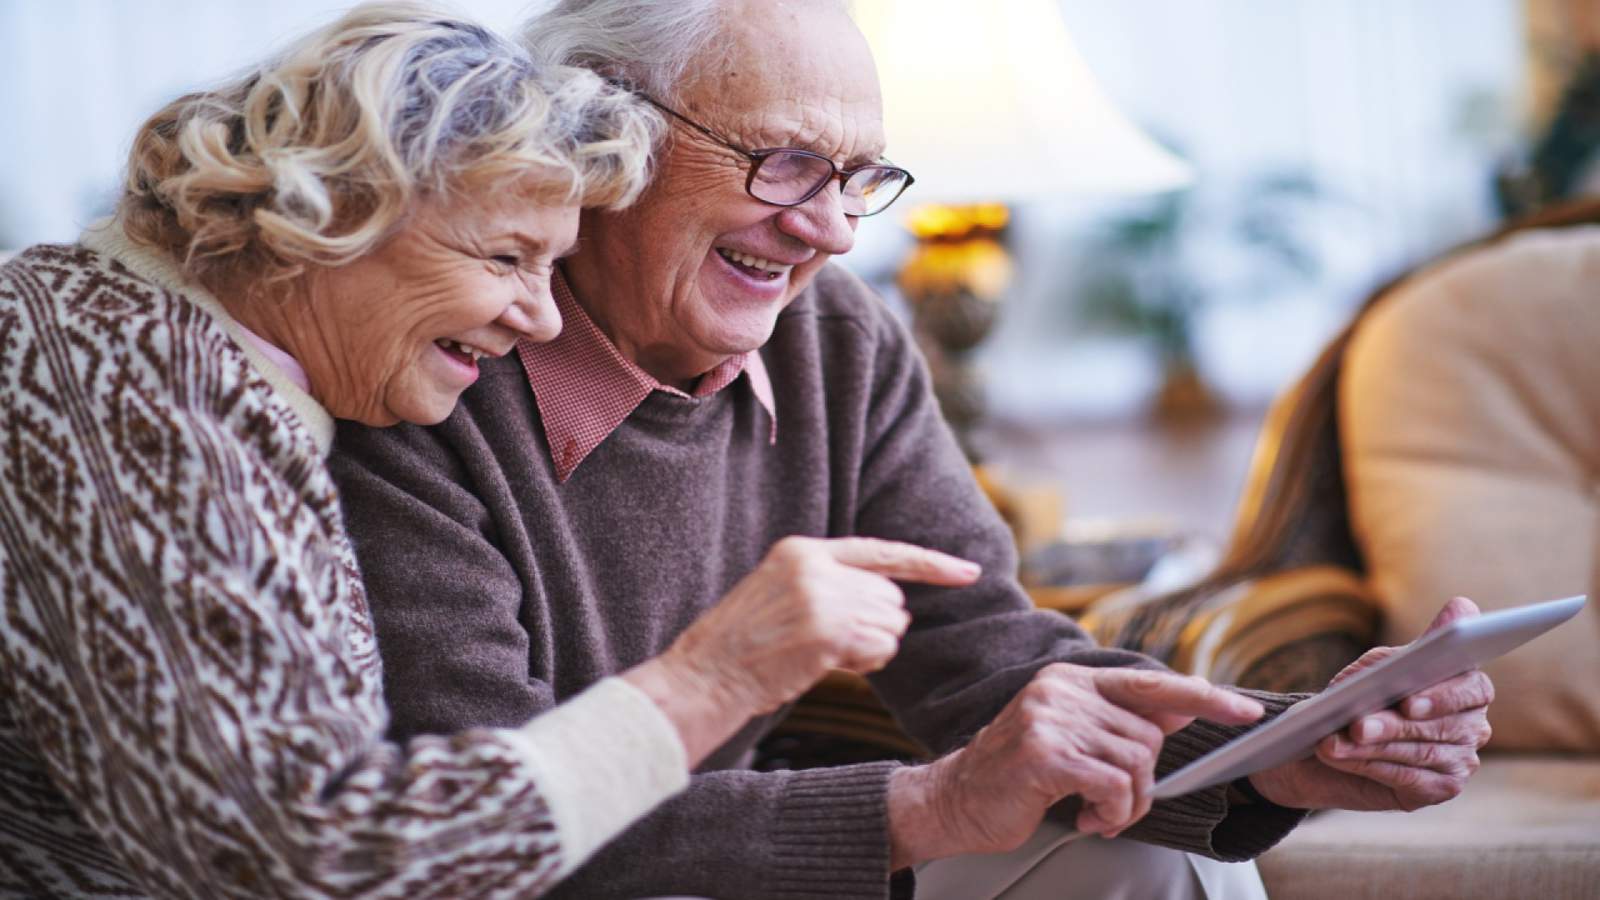 Nonprofit provides free Memory Matters Meet-ups for Alzheimers disease patients, caregivers